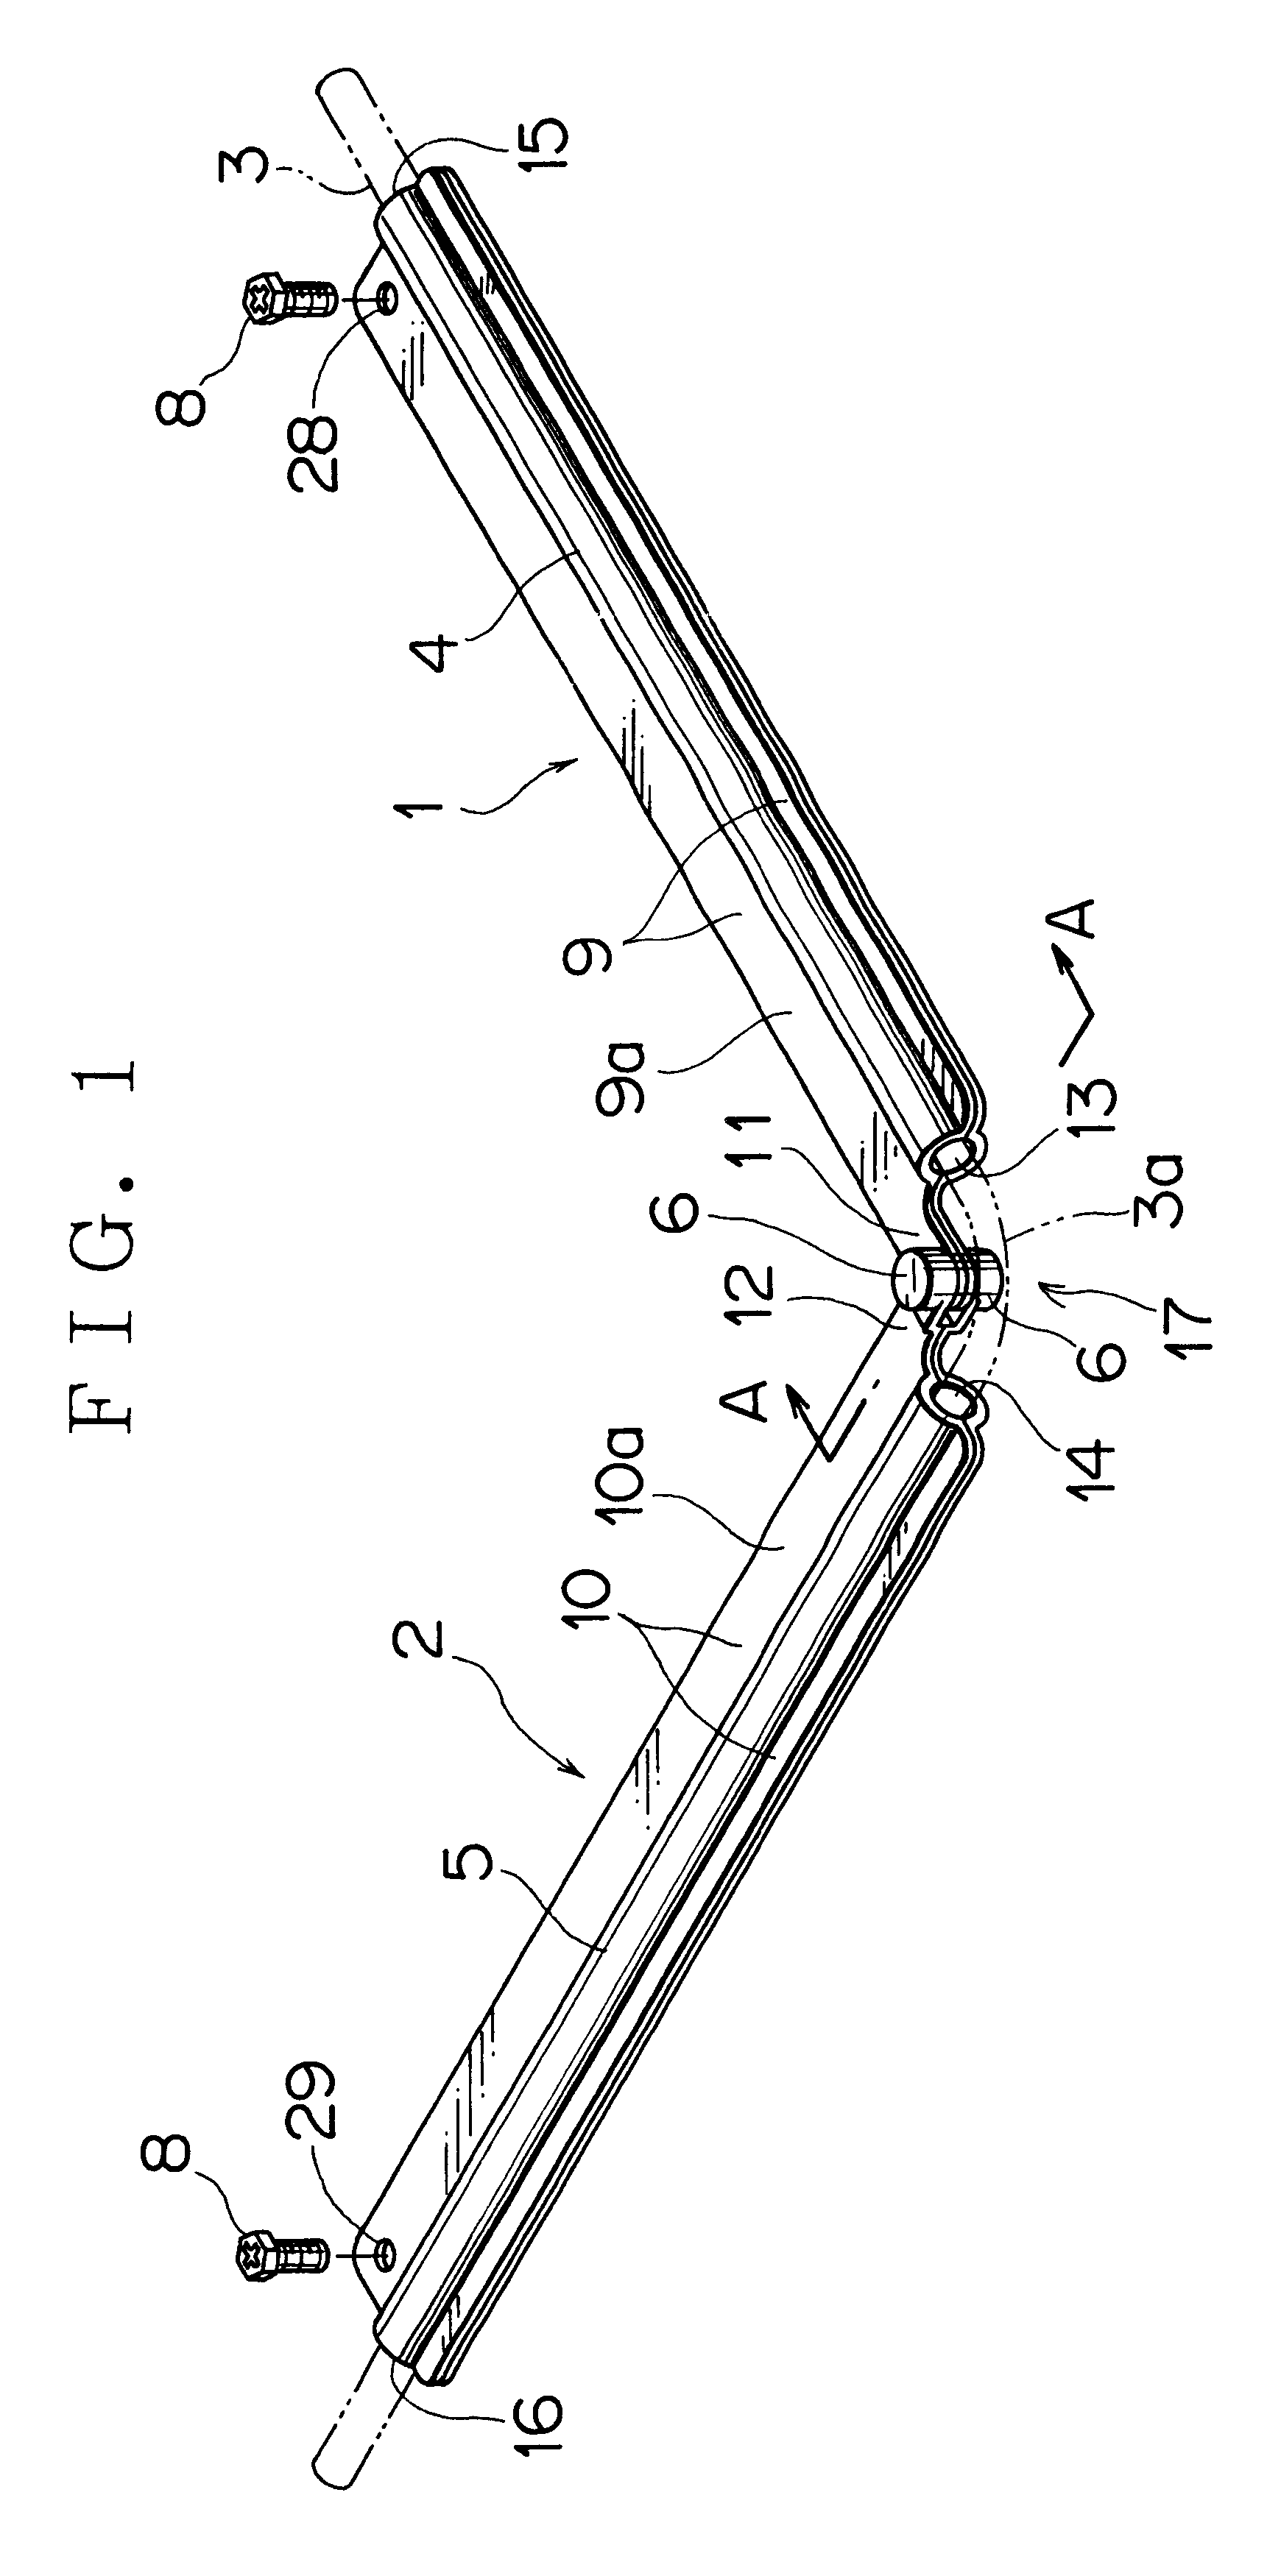 Wiring harness bending mechanism